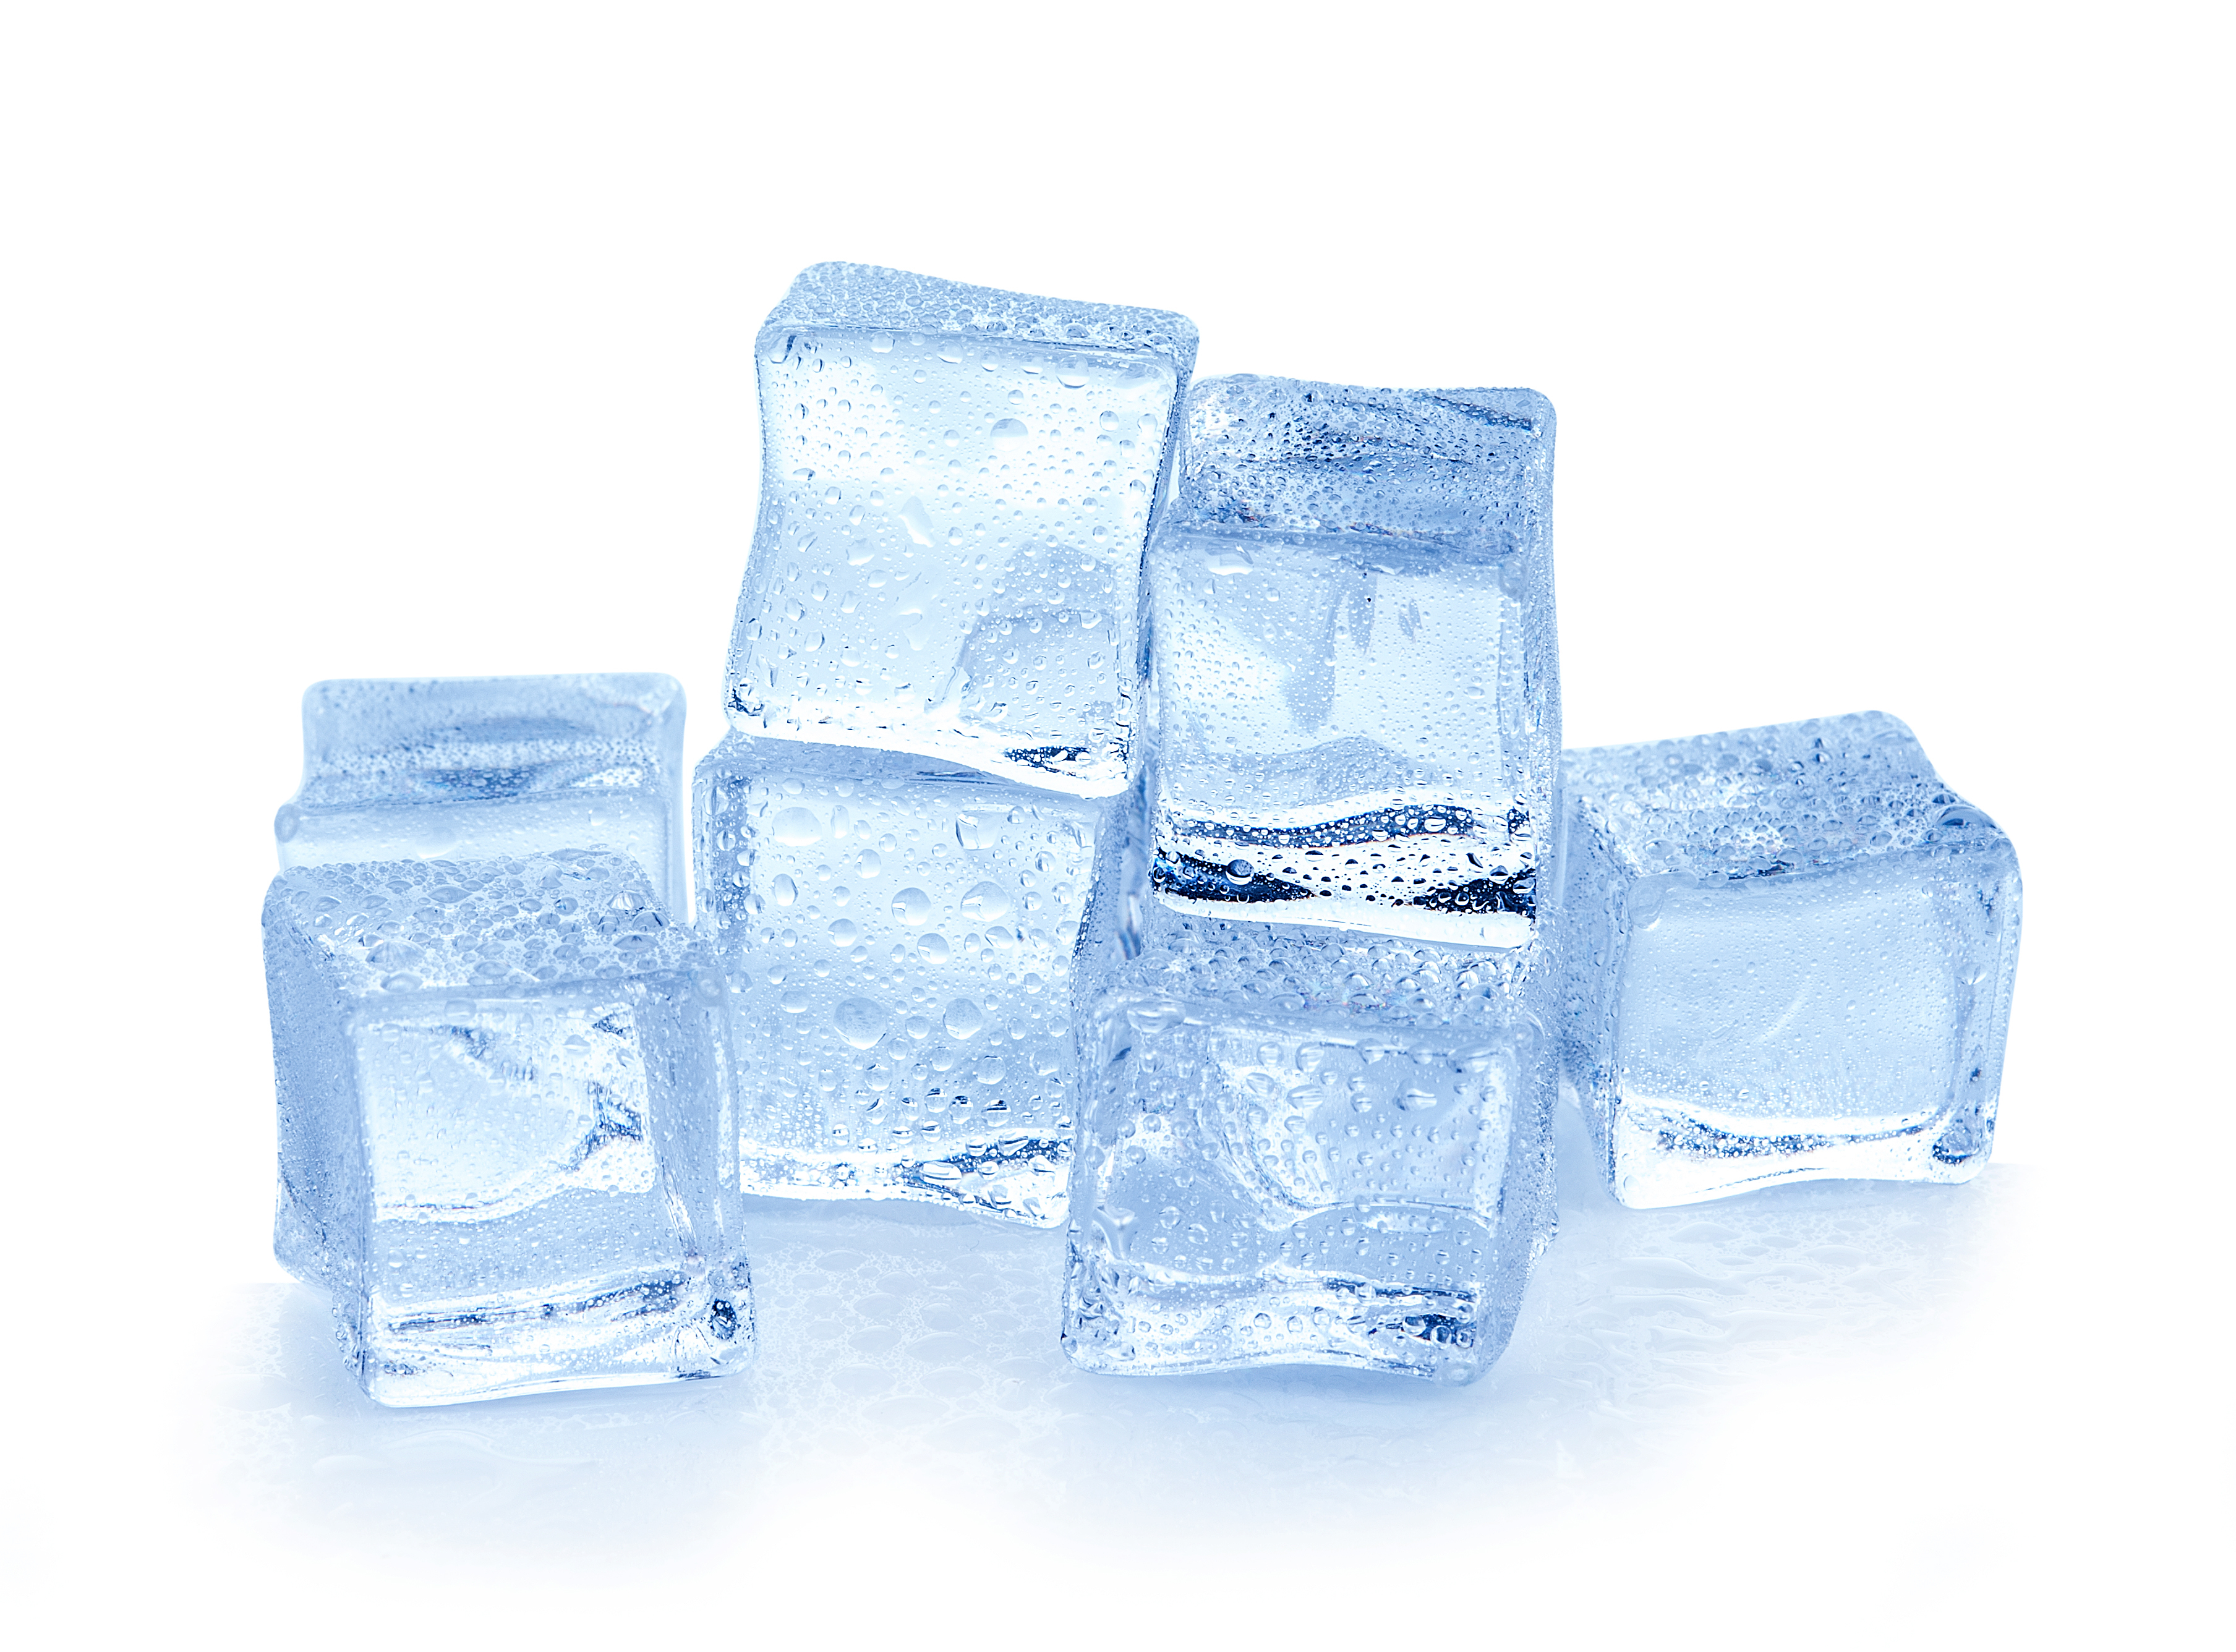 Wc ice cube. Кубики льда. Кубики льда текстура. Ледяной кубик. Ice texture кубики.